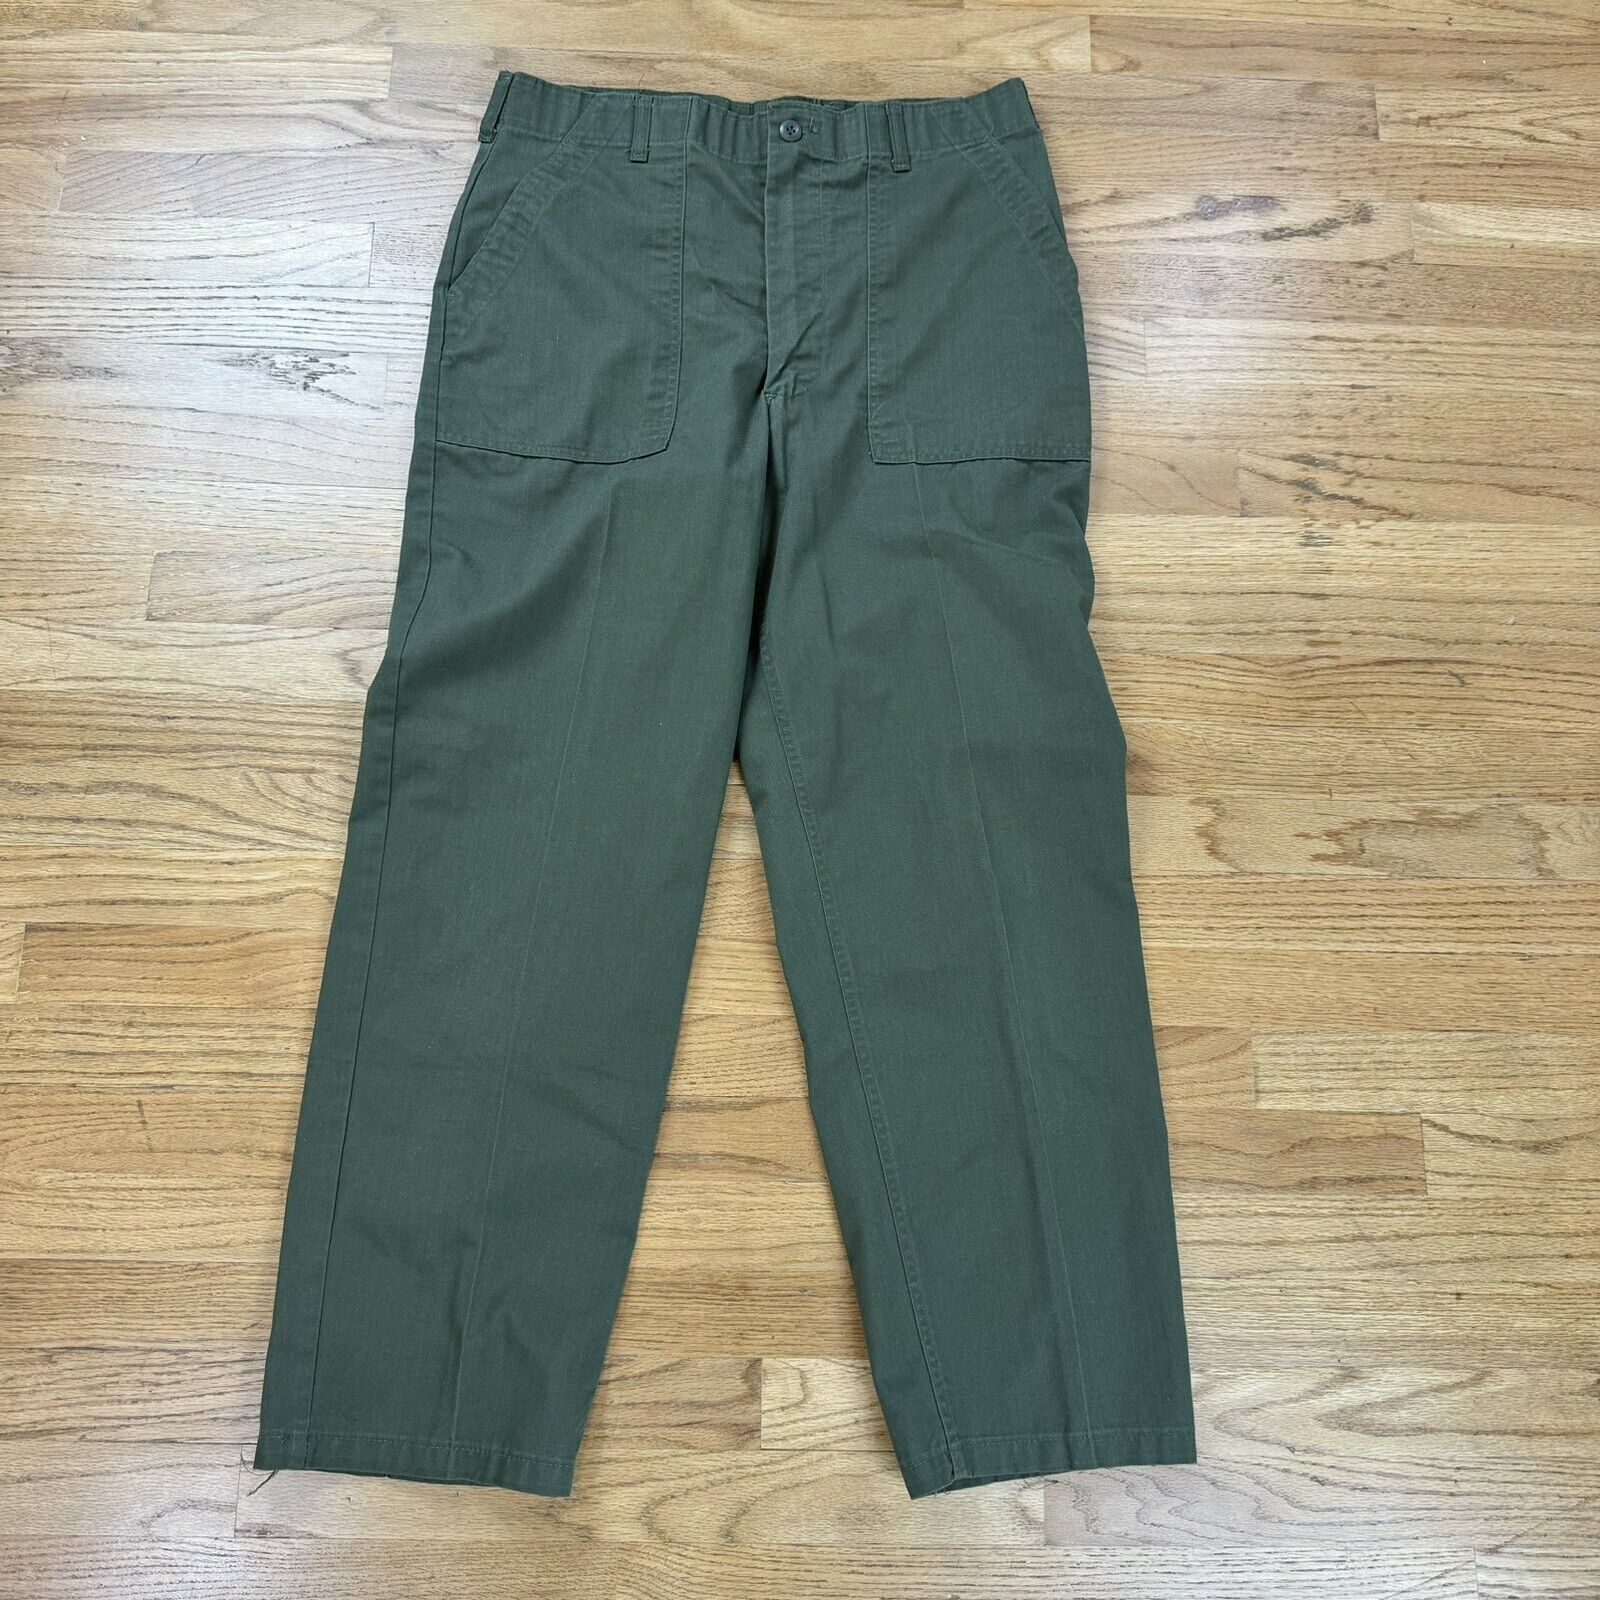 Vtg Military Trousers Utility Durable Press OG-507 Pants Olive Green 36x30 #4